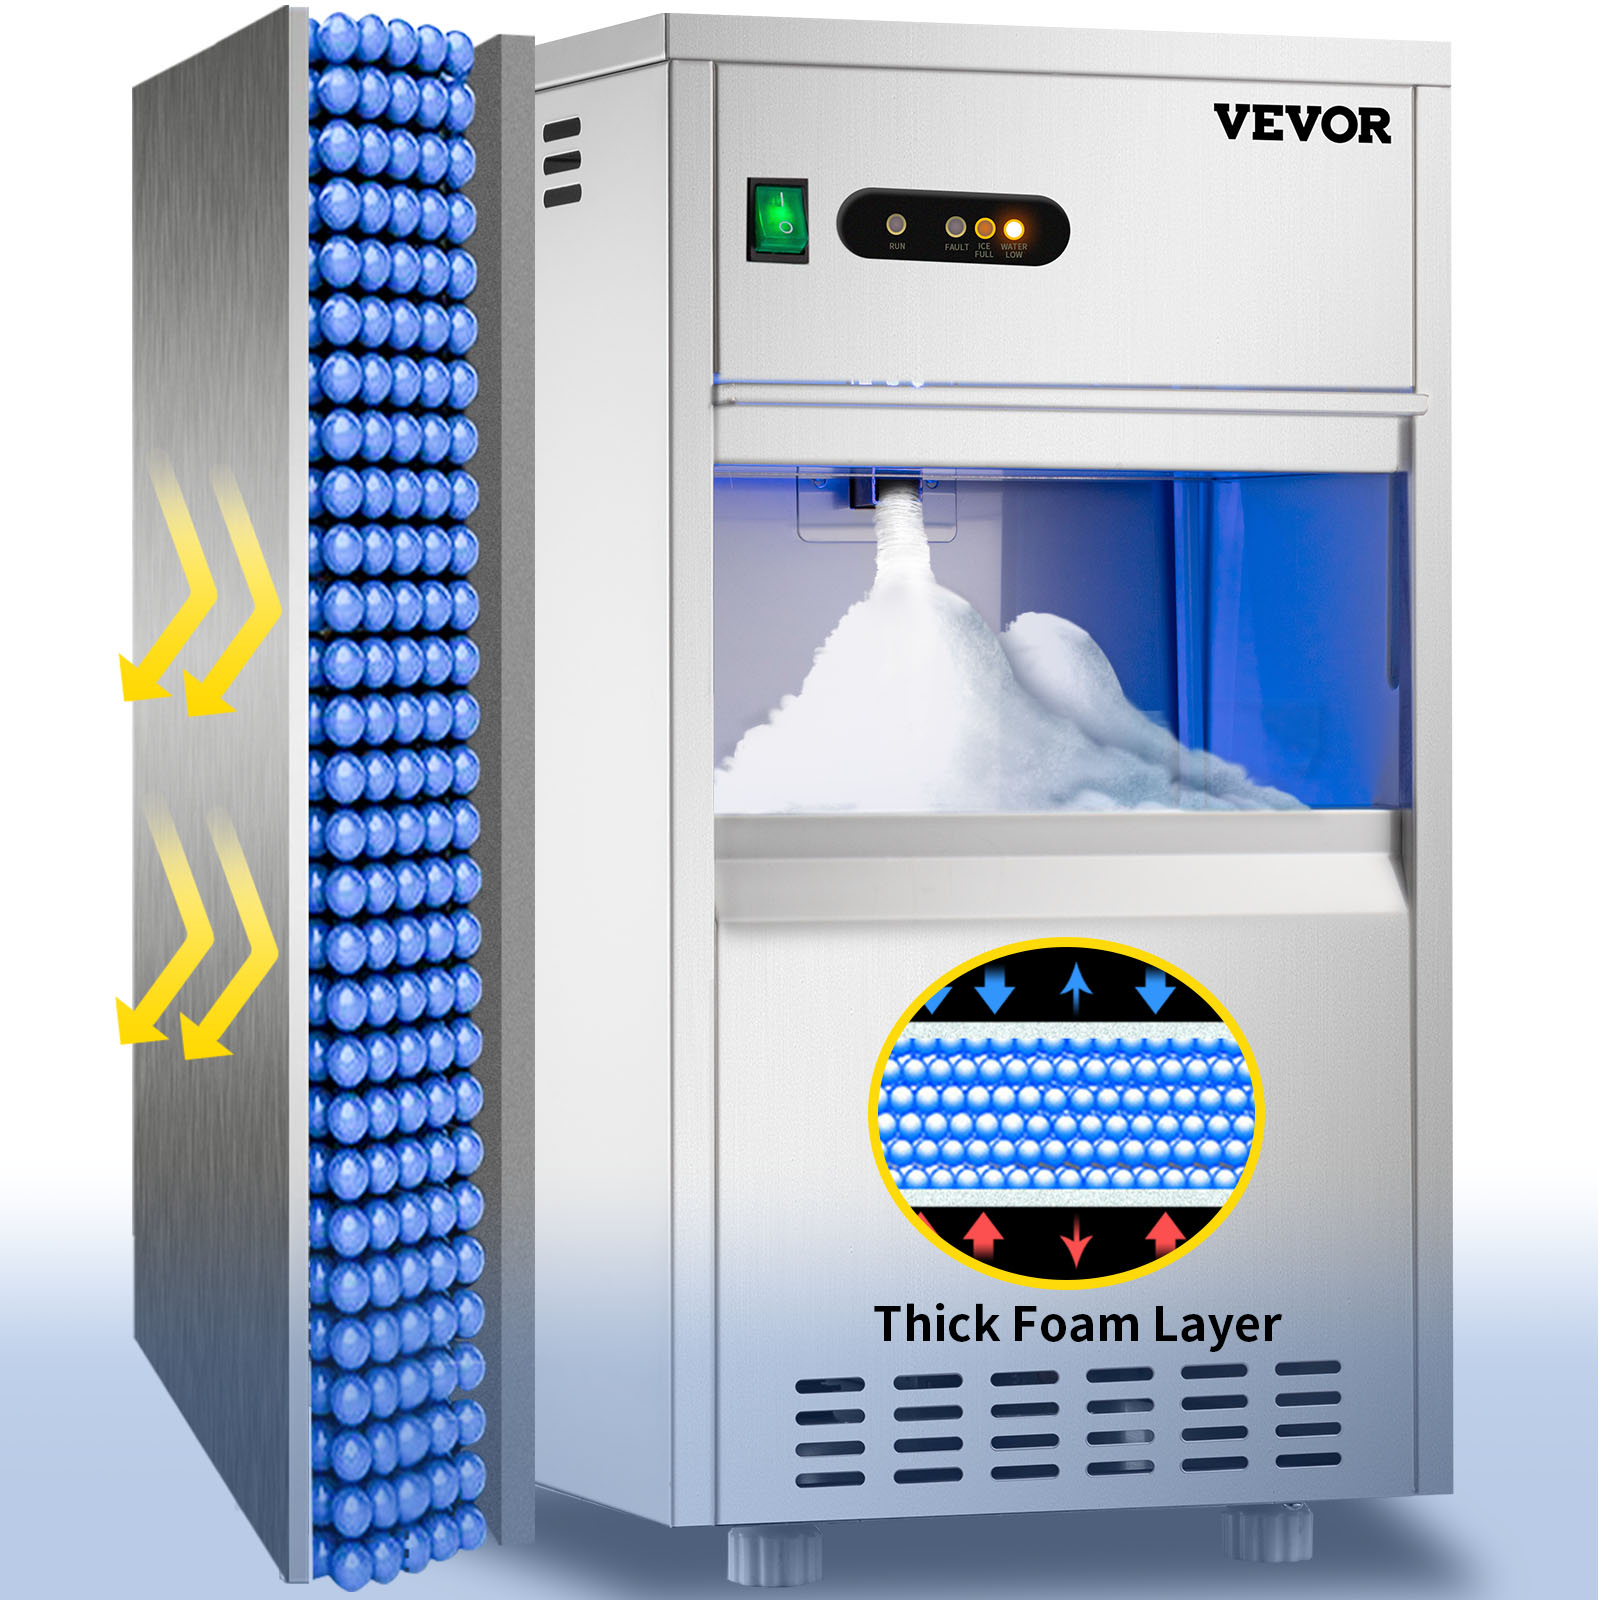 VEVOR Snow Flake Ice Maker 220lbs/100kg Snow Crusher Food Processing 380W Supermarket